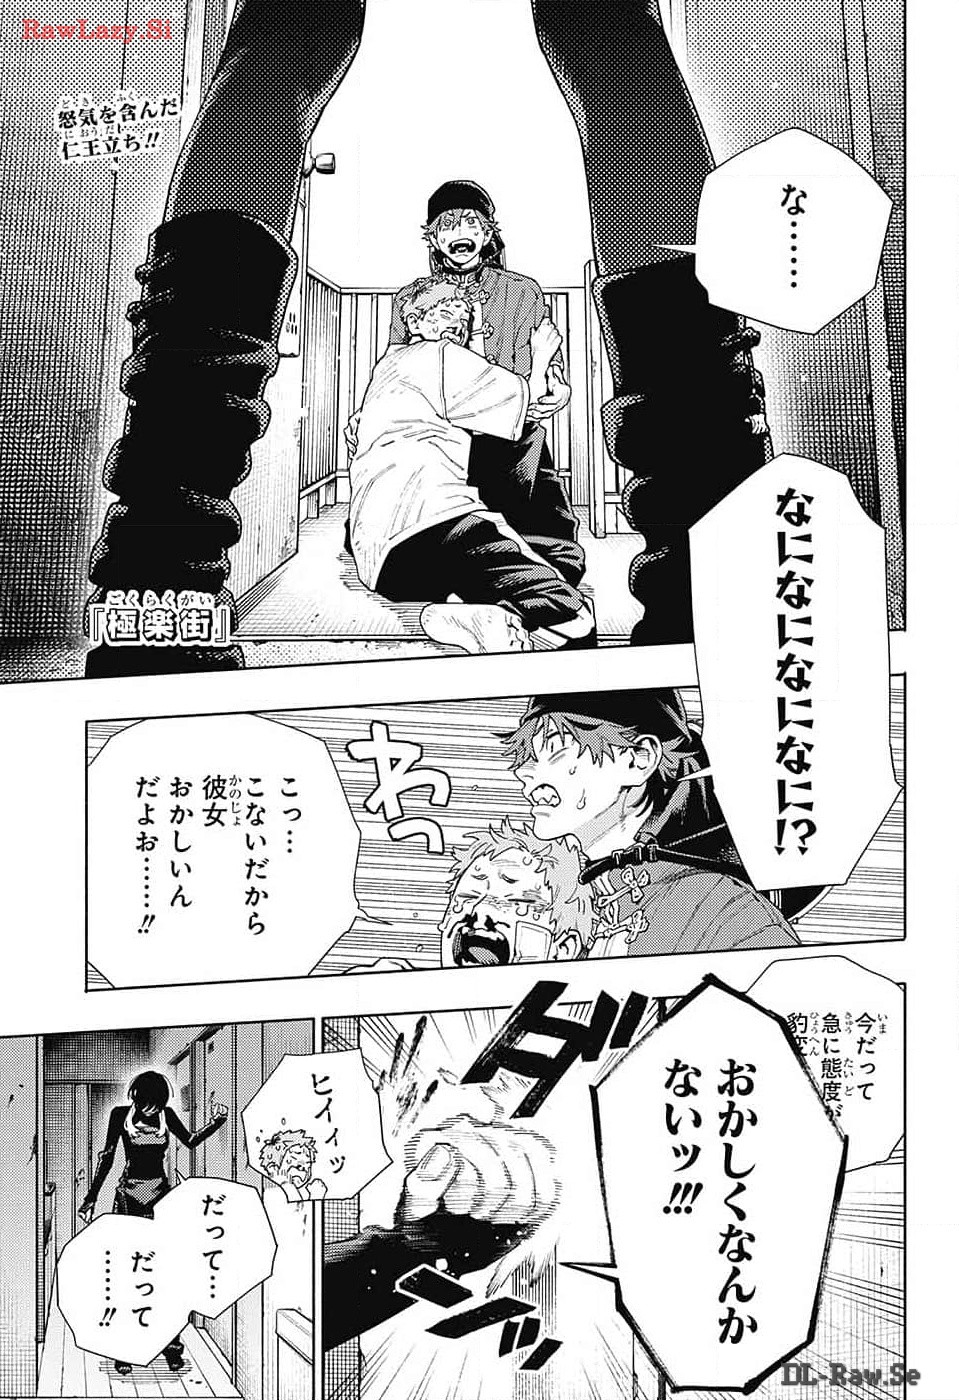 Gokurakugai - Chapter 17 - Page 1